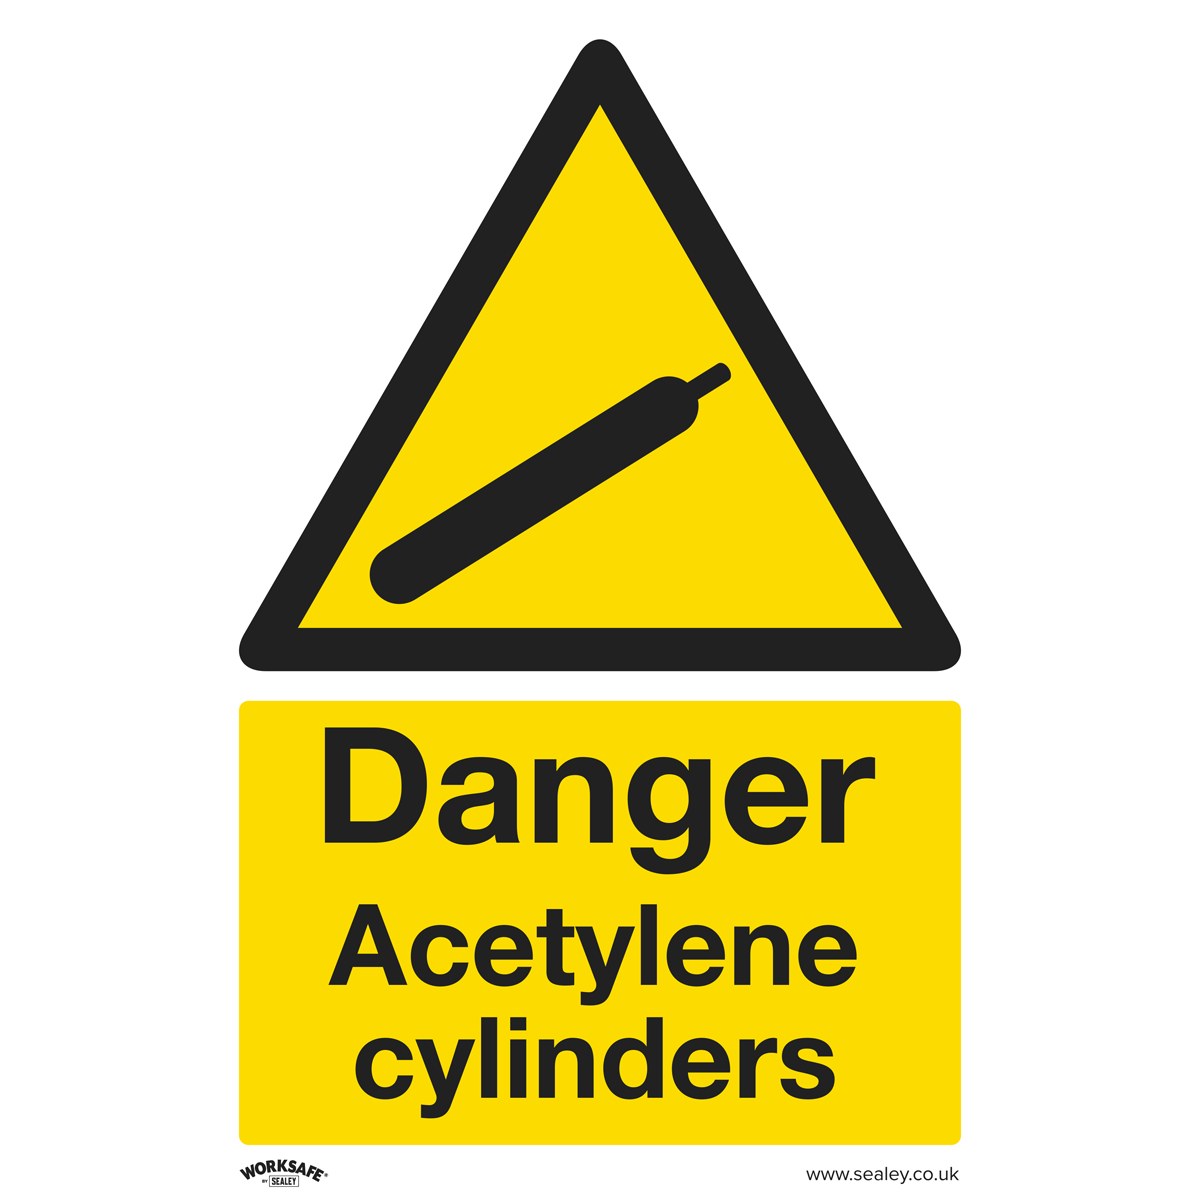 Warning Safety Sign - Danger Acetylene Cylinders - Rigid Plastic